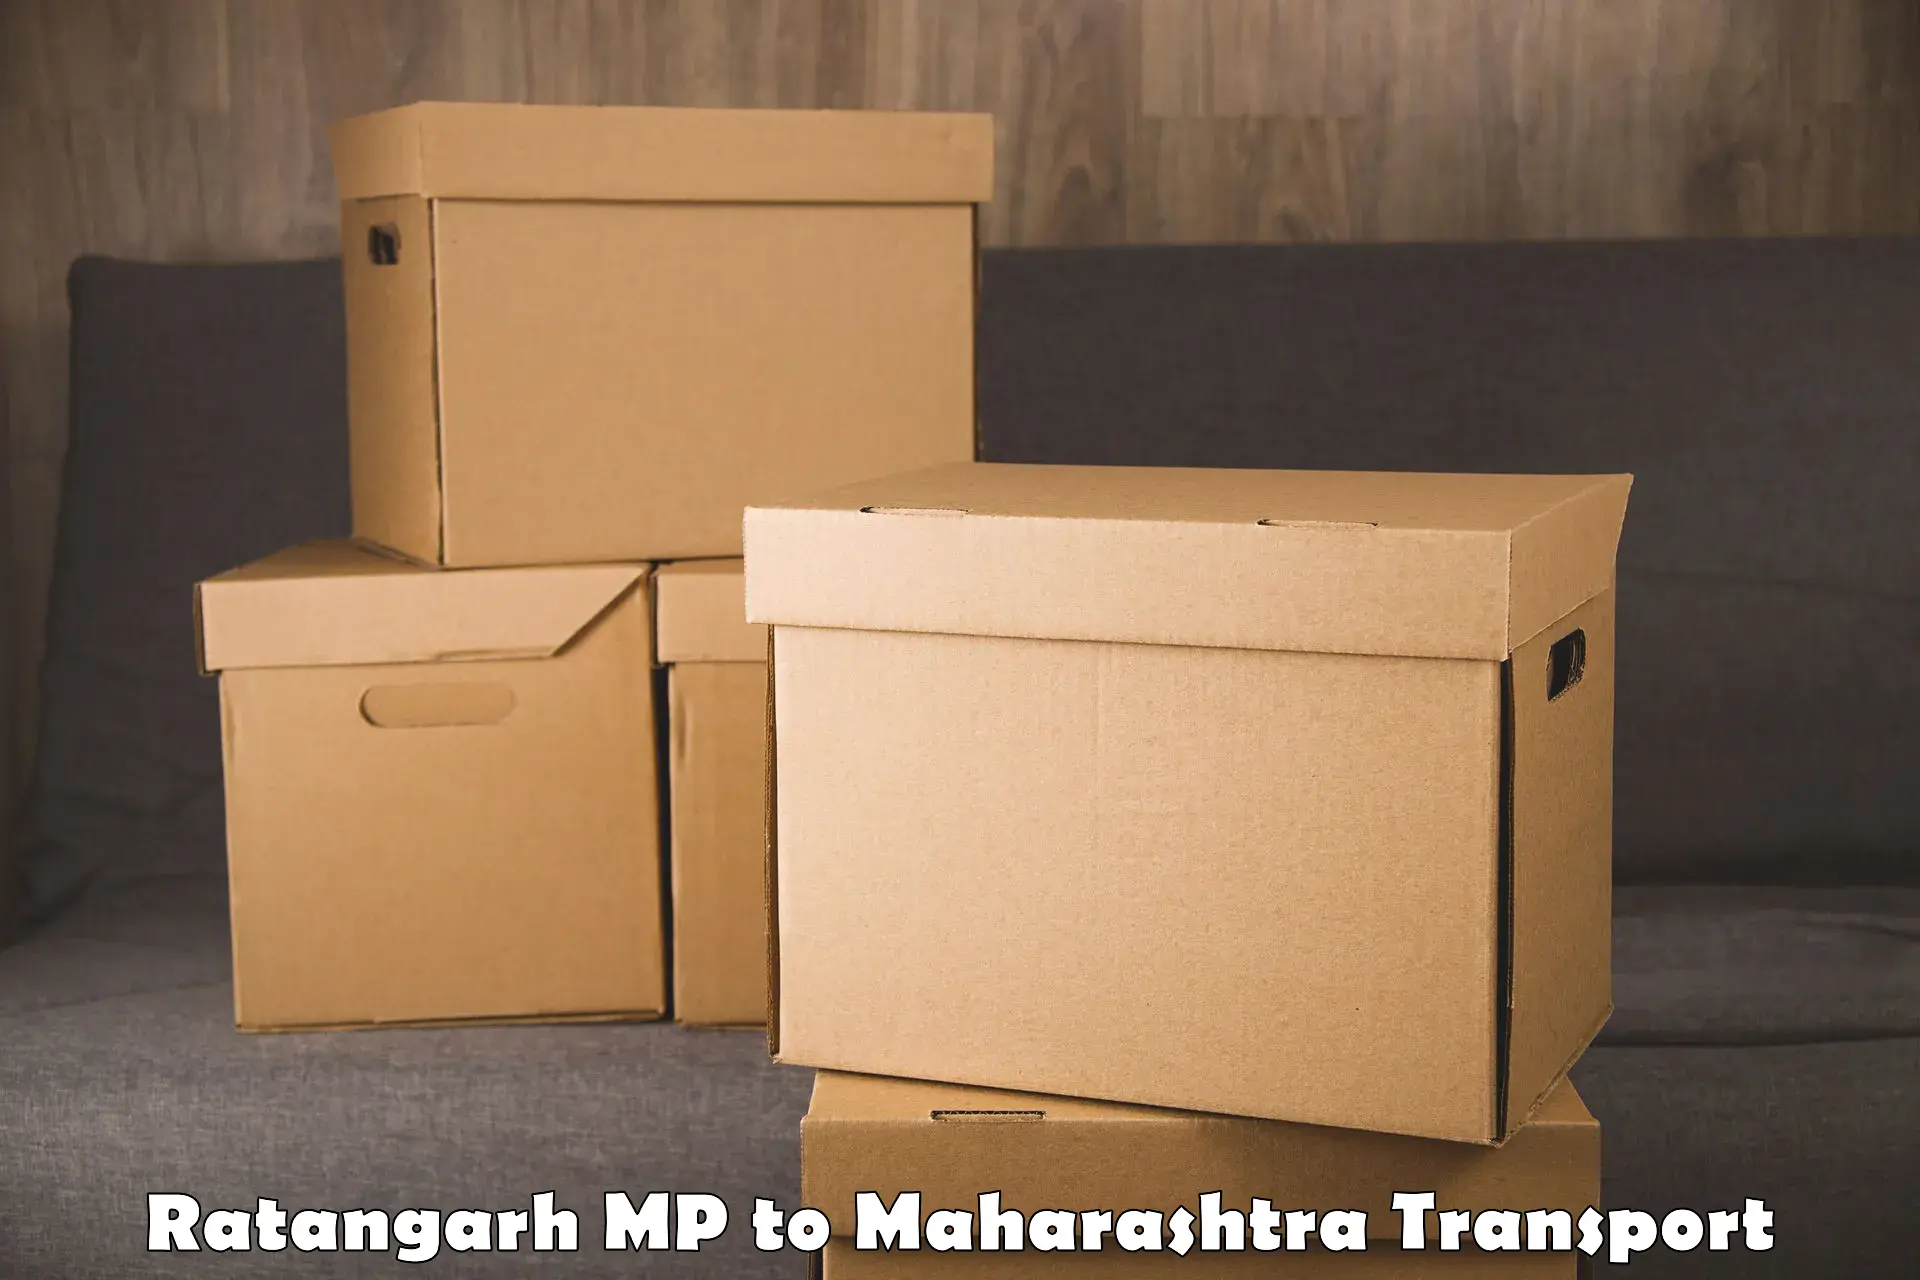 Land transport services in Ratangarh MP to Bhiwandi